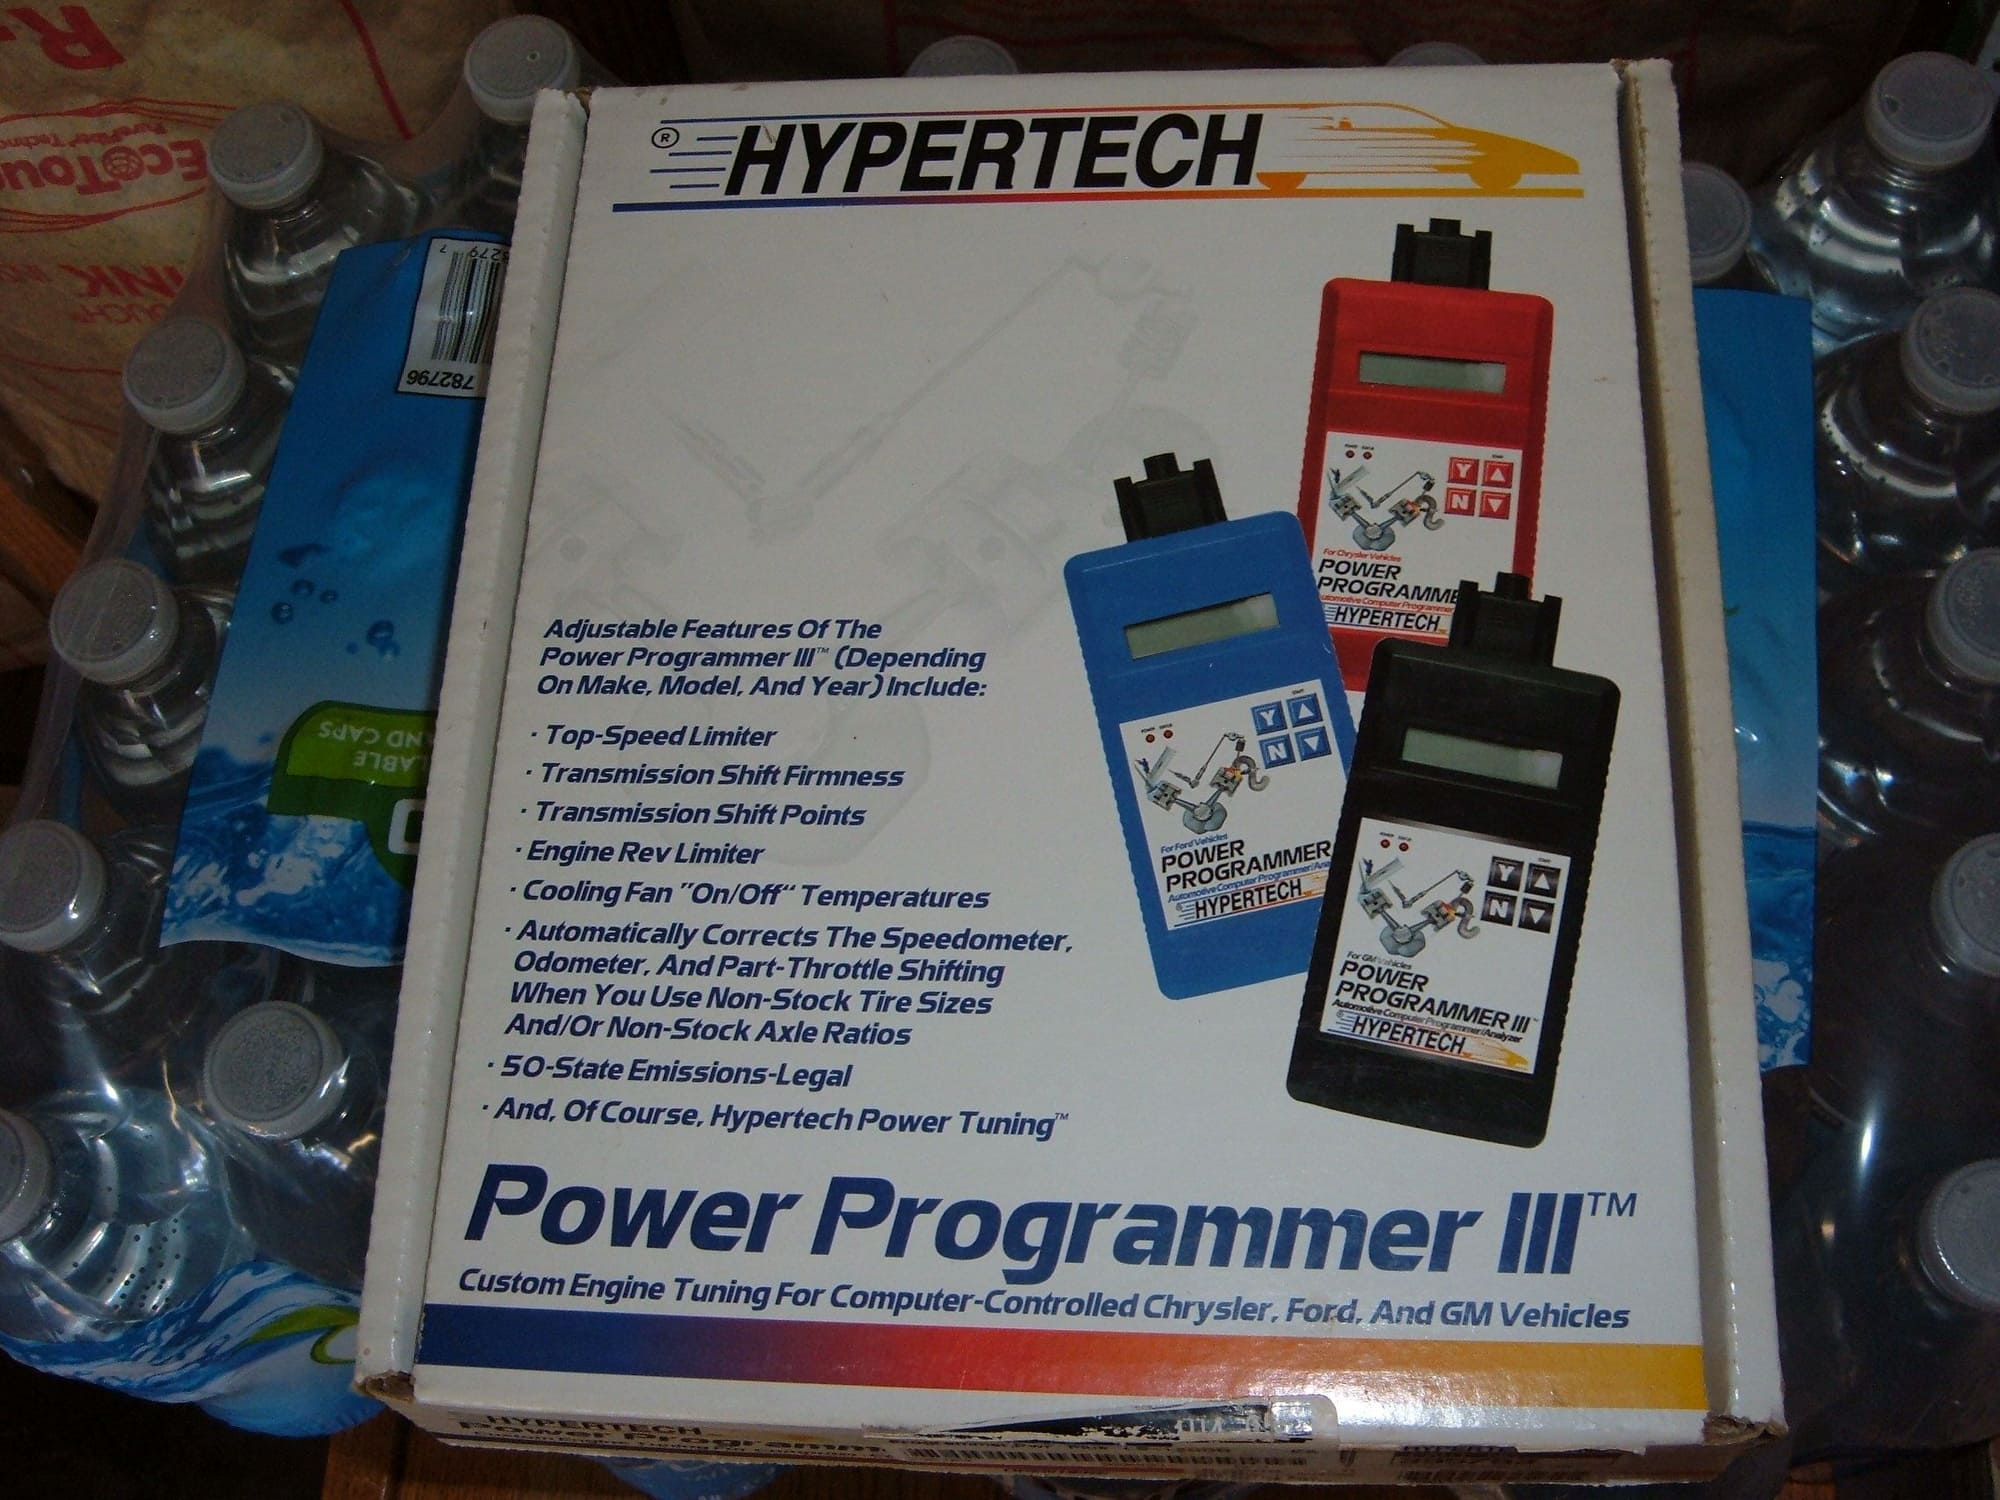  - Hypertech Programmer III - Placerville, CA 95667, United States